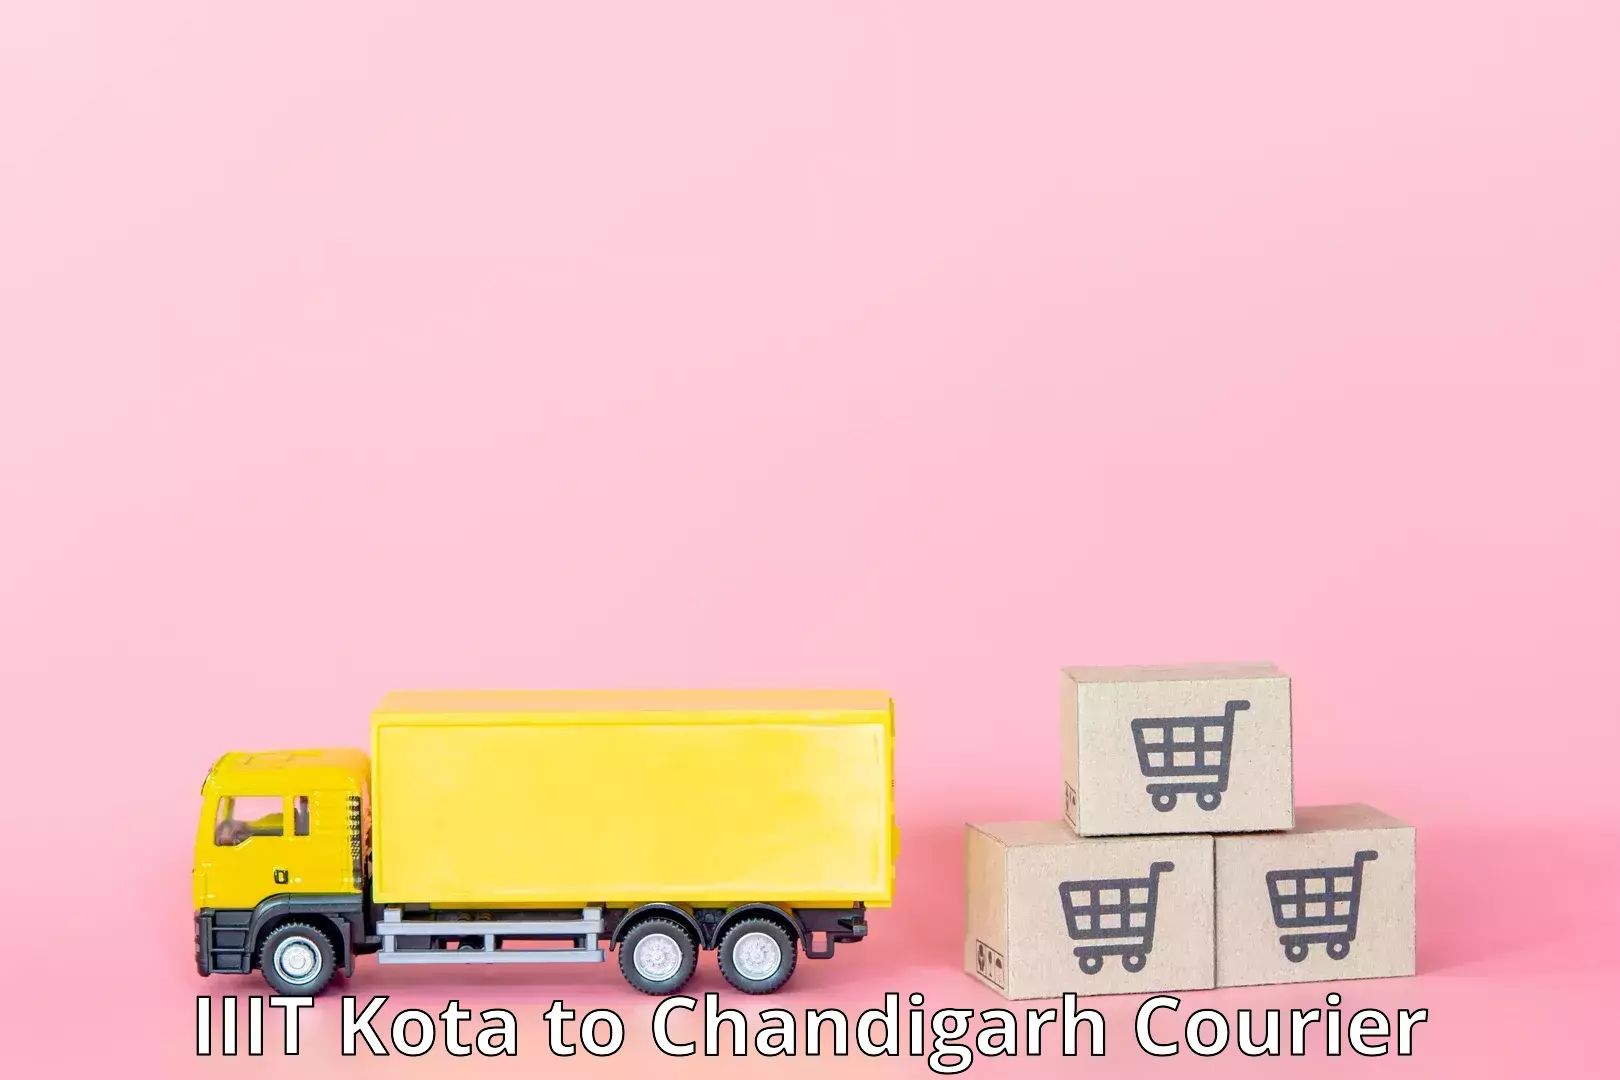 Courier service innovation IIIT Kota to Chandigarh